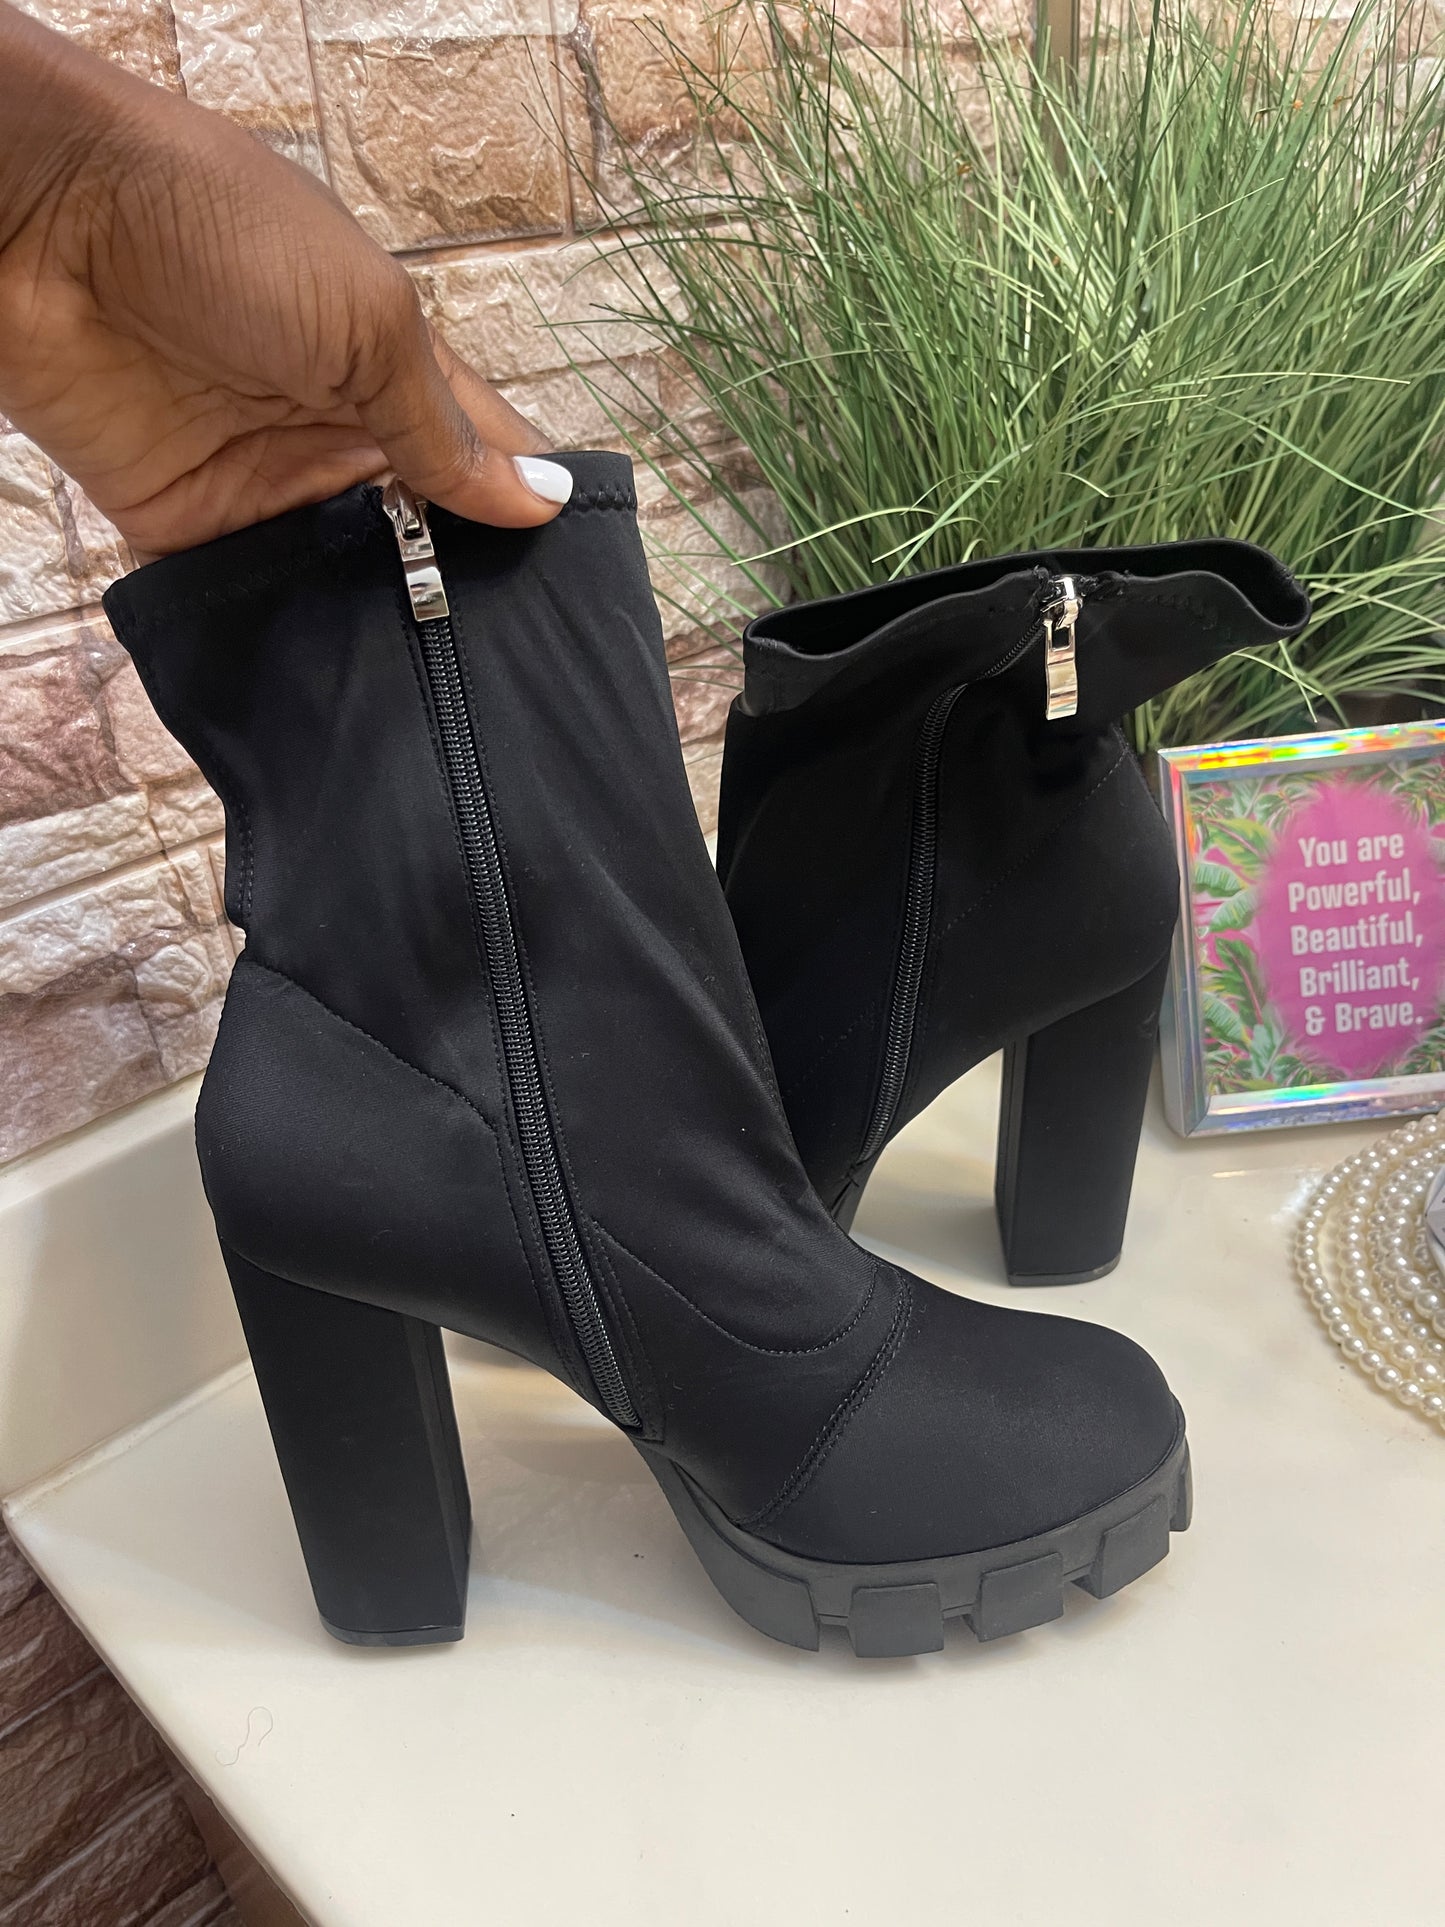 Fashion Nova Black Heels Women sz 10